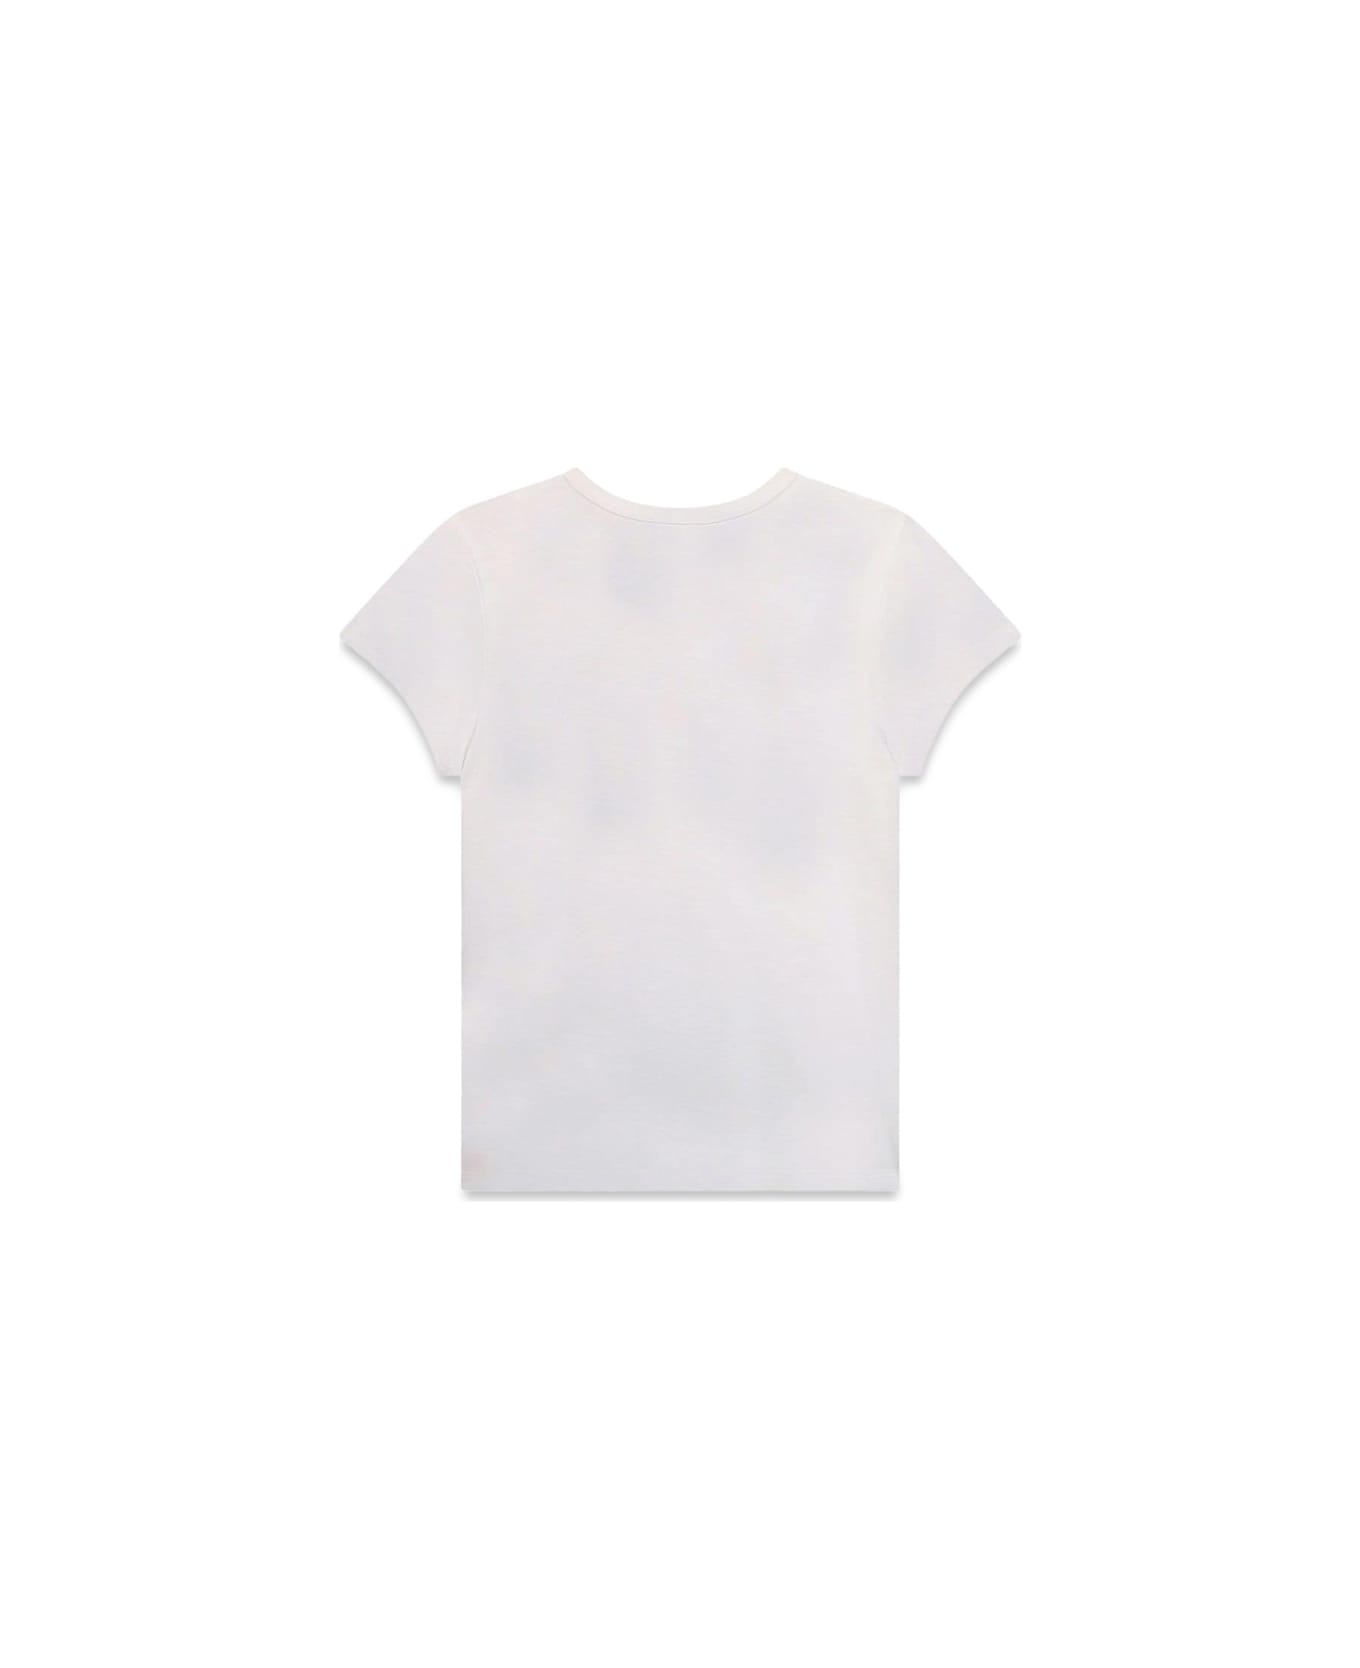 Sonia Rykiel Tee Shirt - WHITE